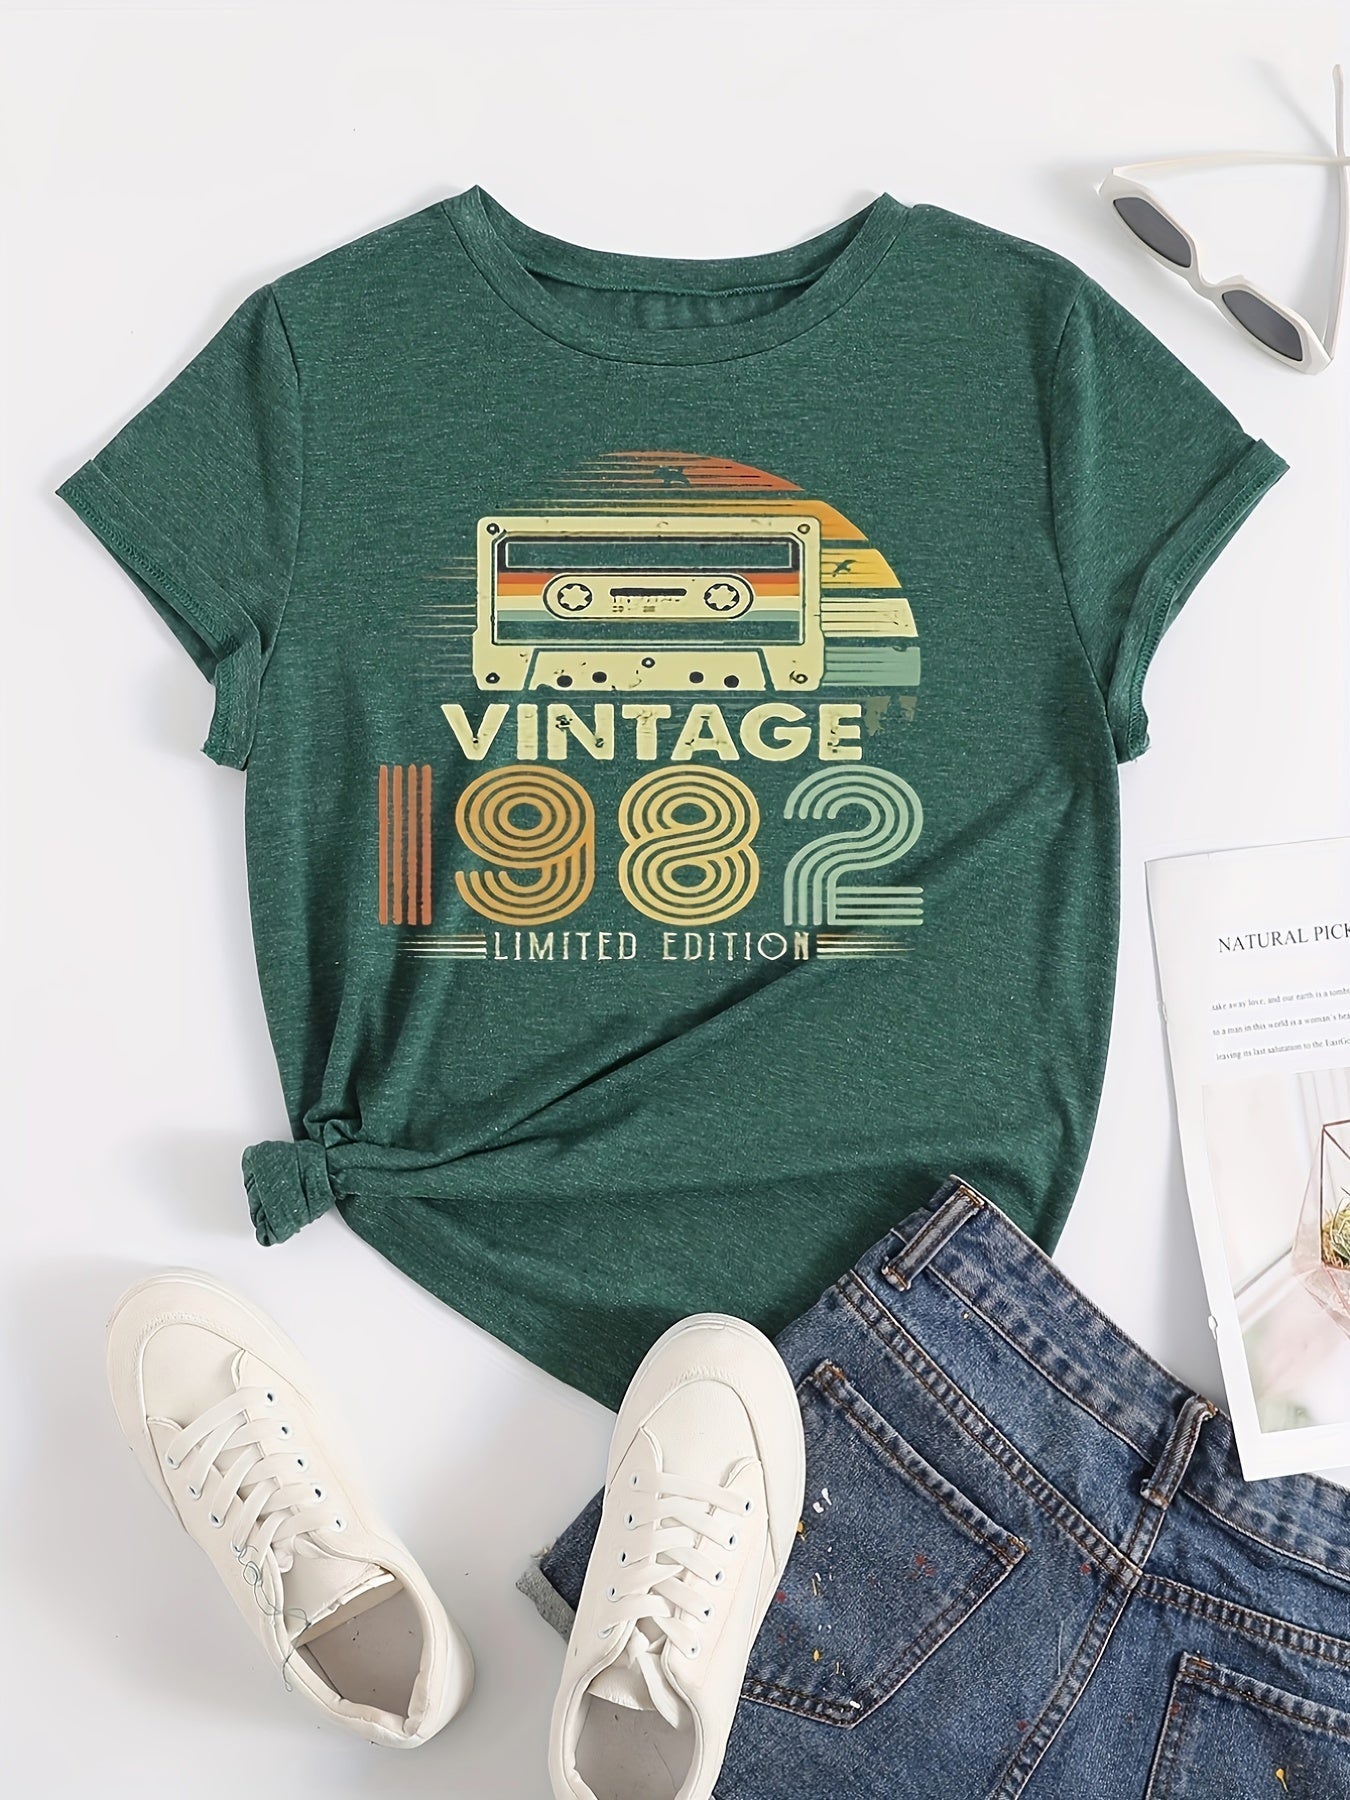 Vintage 1982 Letter Print T-shirt, Casual Crew Neck Short Sleeve T-shirt, Women's Clothing